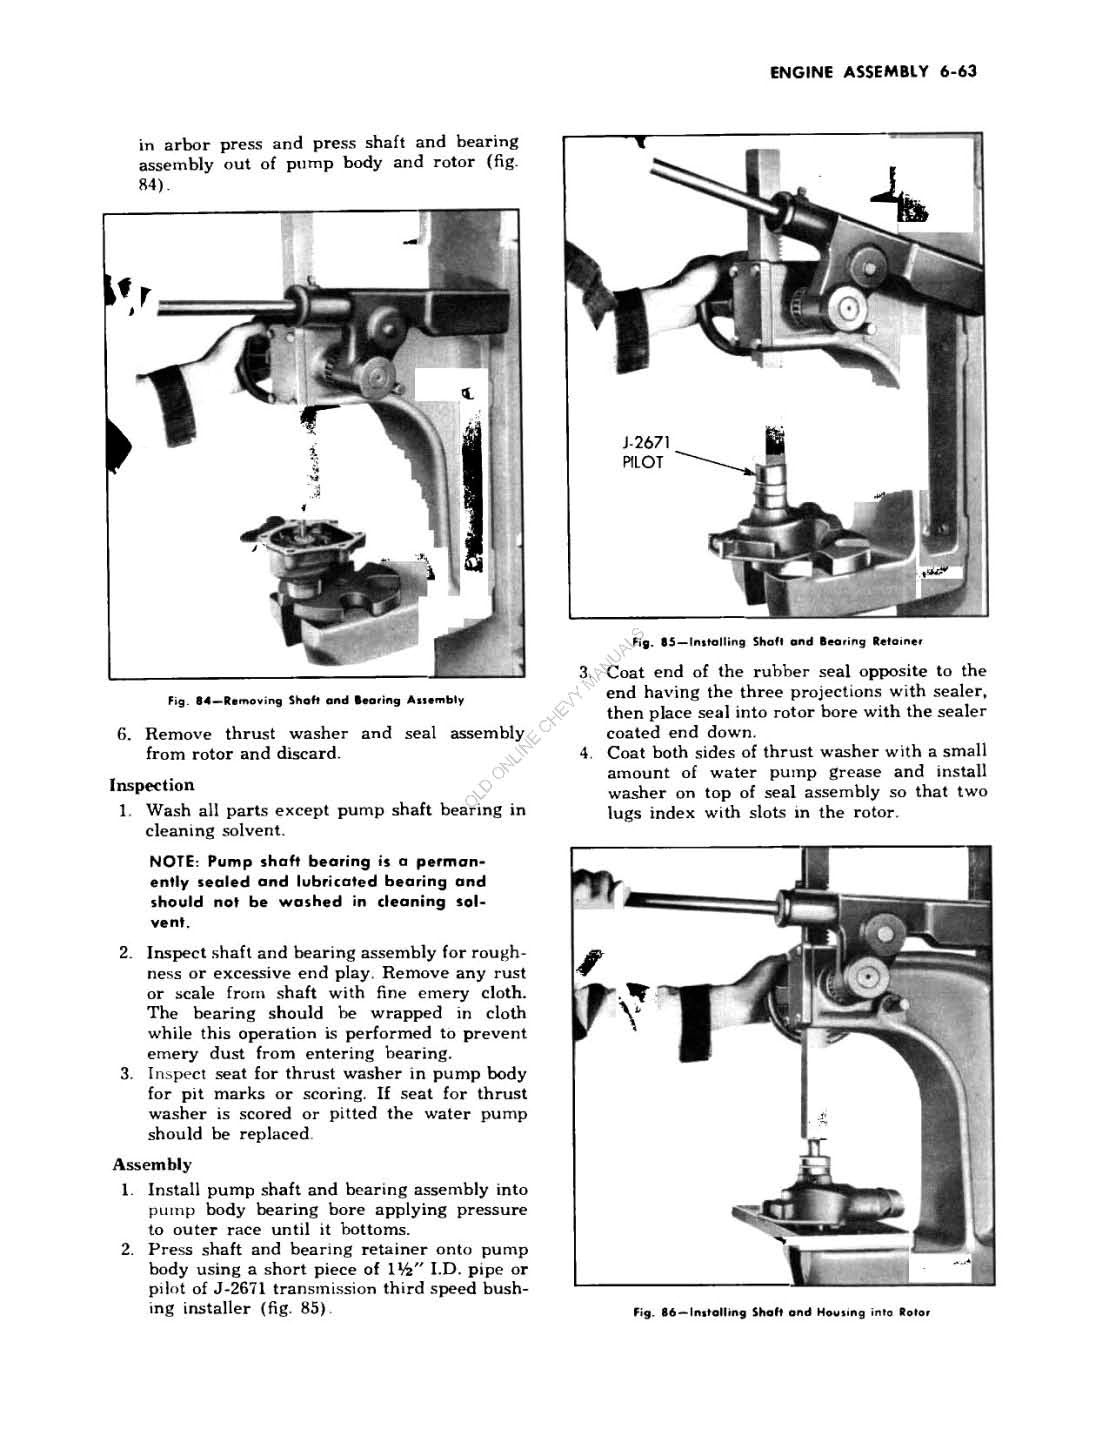 1949 Chevrolet Passenger Car Repair Manual including 1950-1 Suppliment